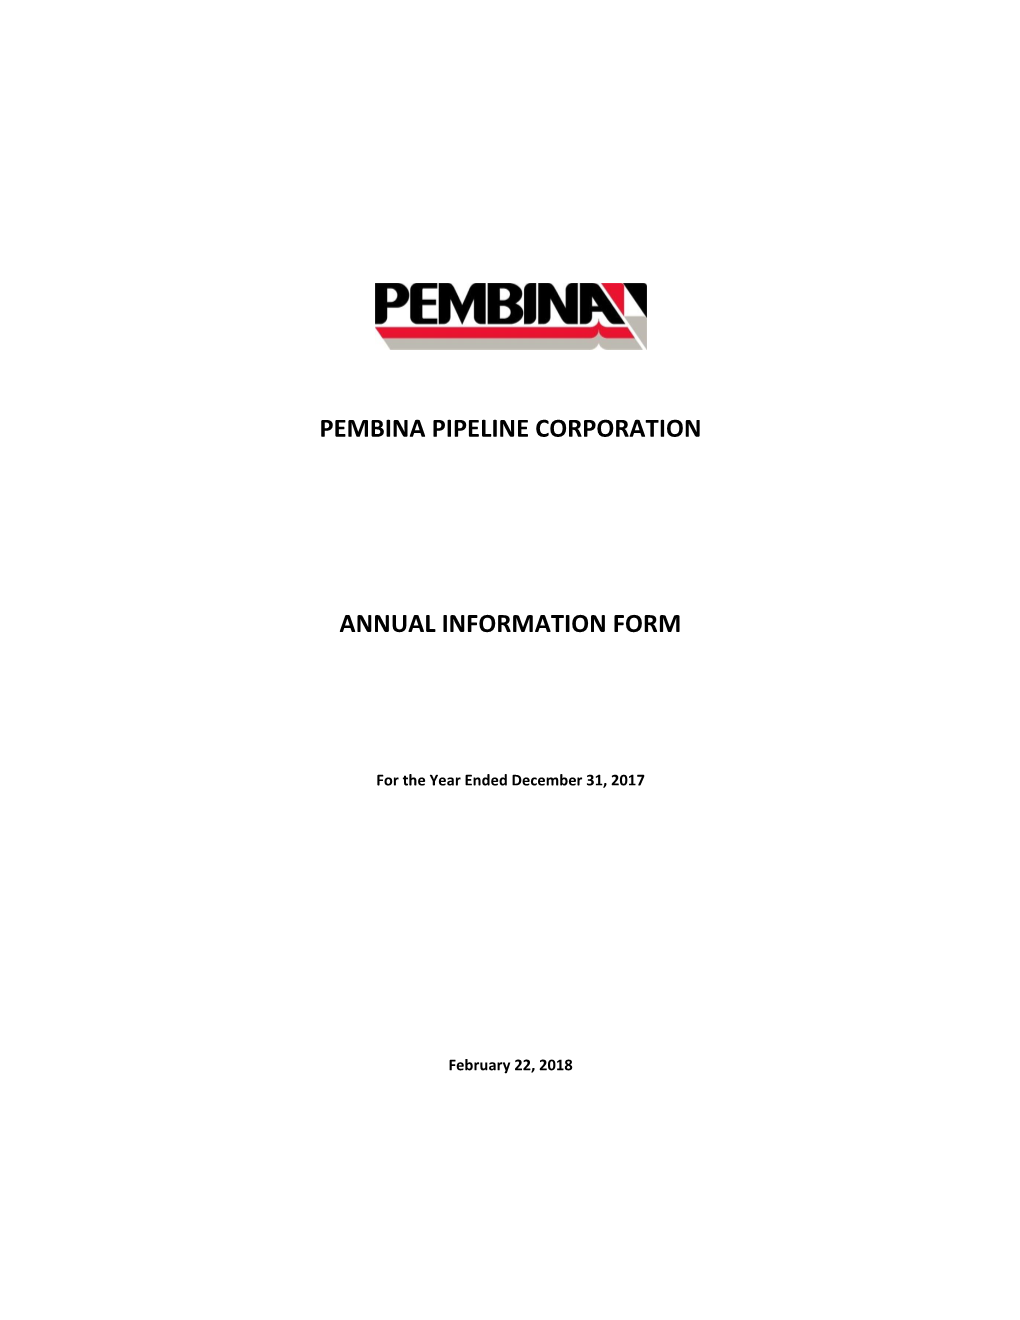 Pembina Pipeline Corporation Annual Information Form